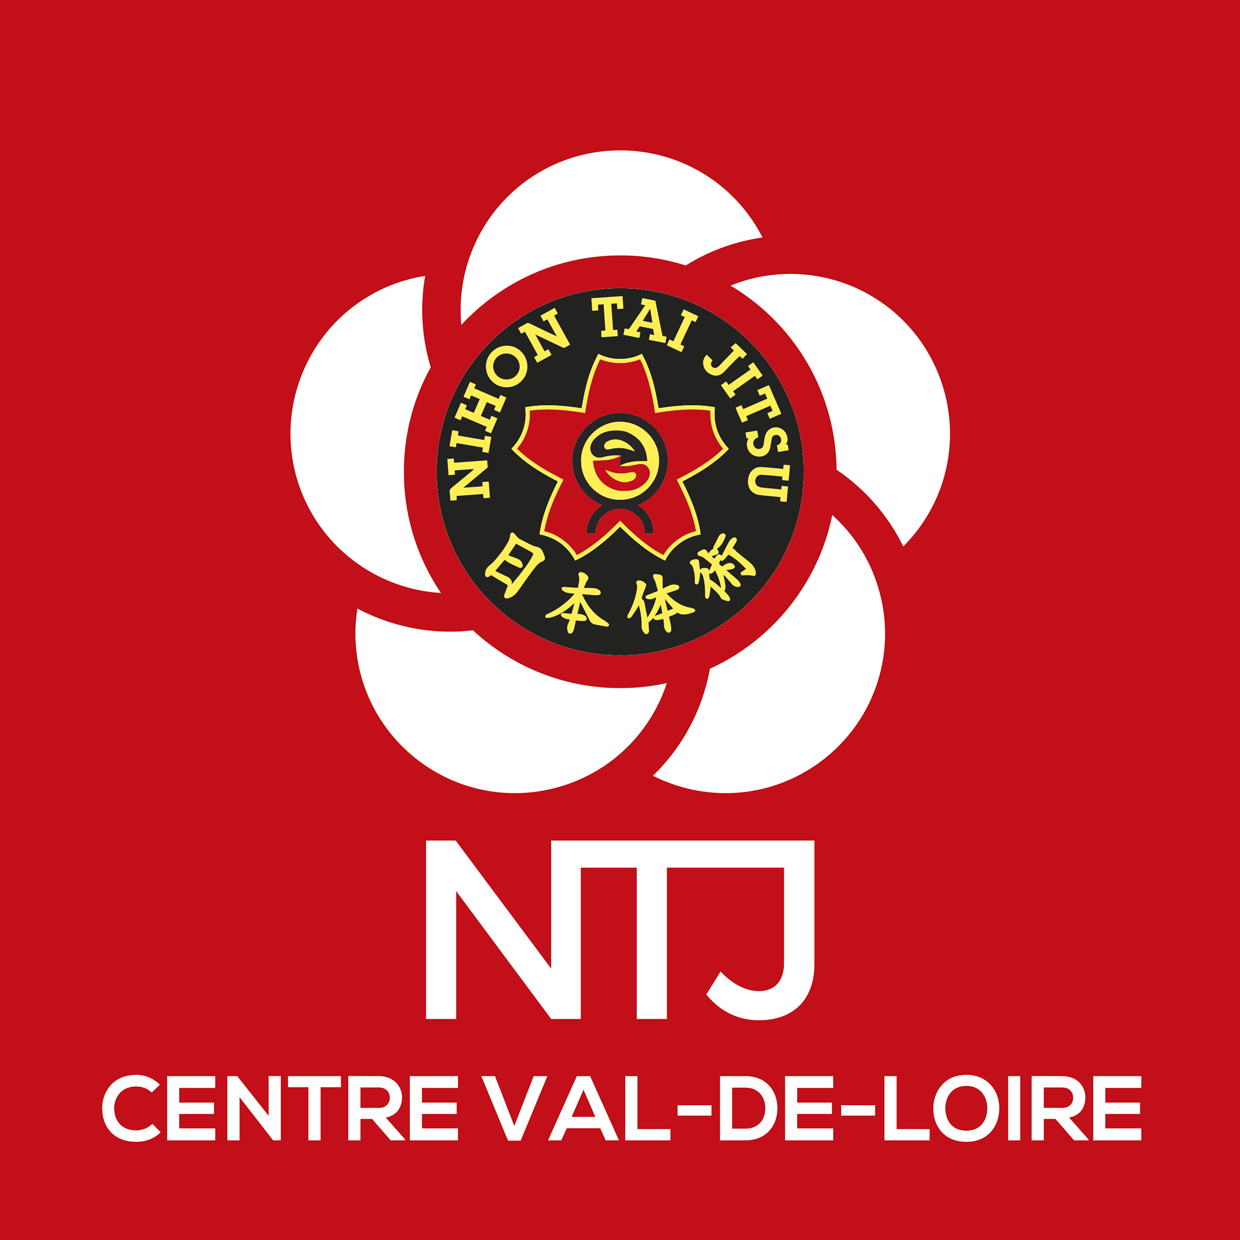 NTJ region CENTRE VAL DE LOIRE logo rvb